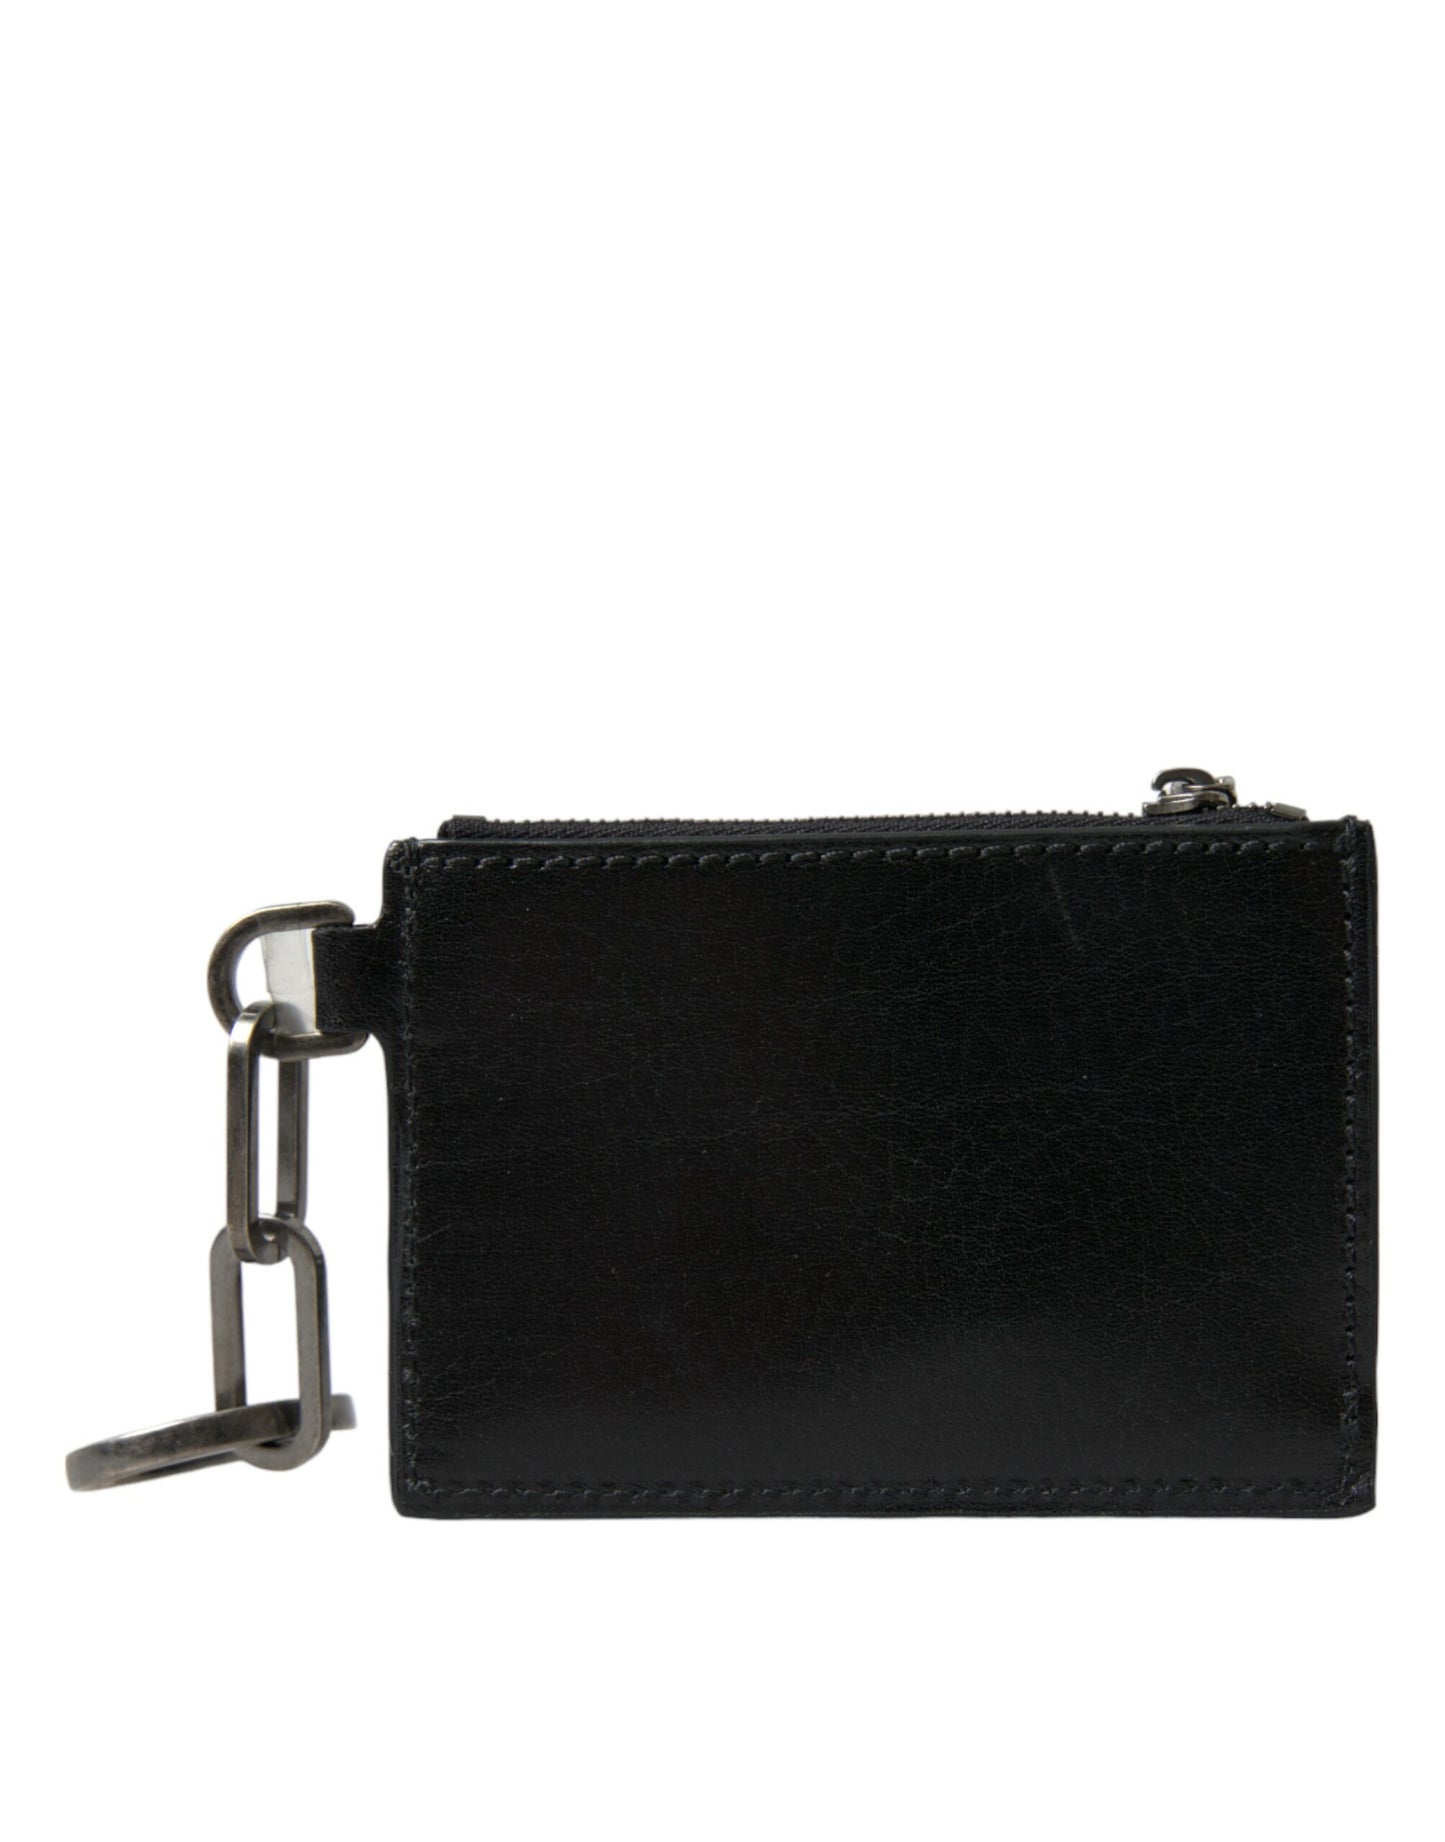 Dolce & Gabbana Black Leather Zip Coin Purse  Wallet